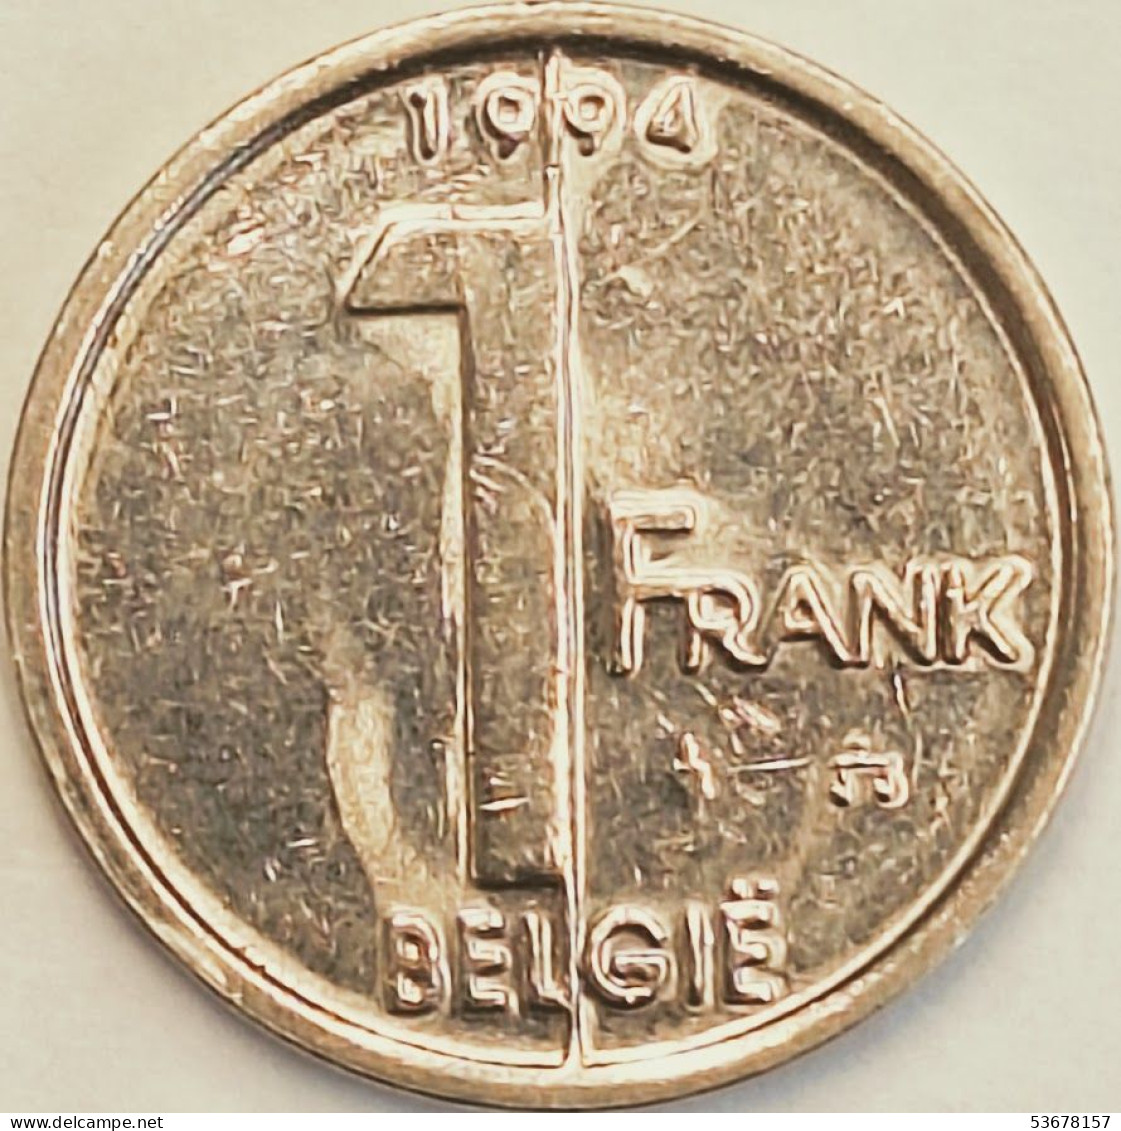 Belgium - Franc 1994, KM# 188 (#3149) - 1 Frank